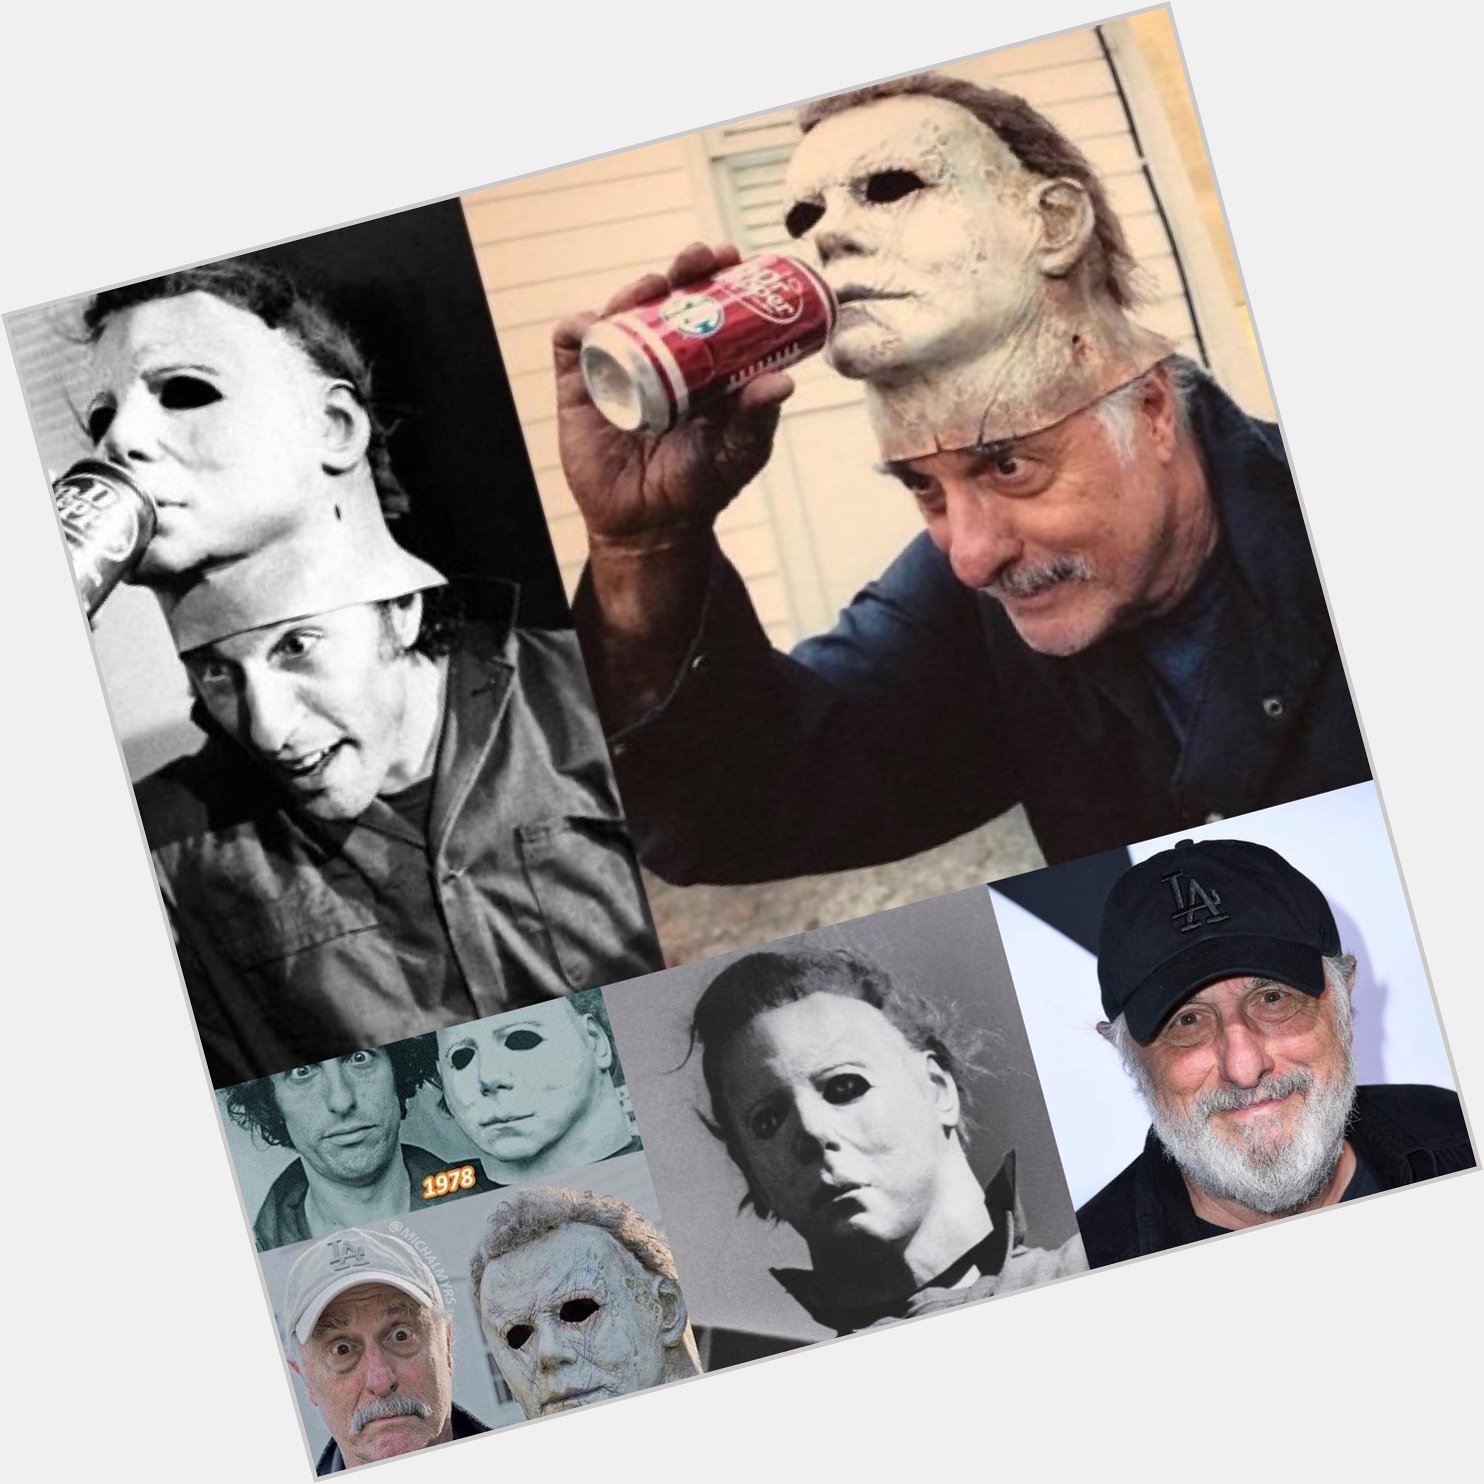 Happy 73rd birthday to Horror icon Nick Castle AKA Michael Myers!  